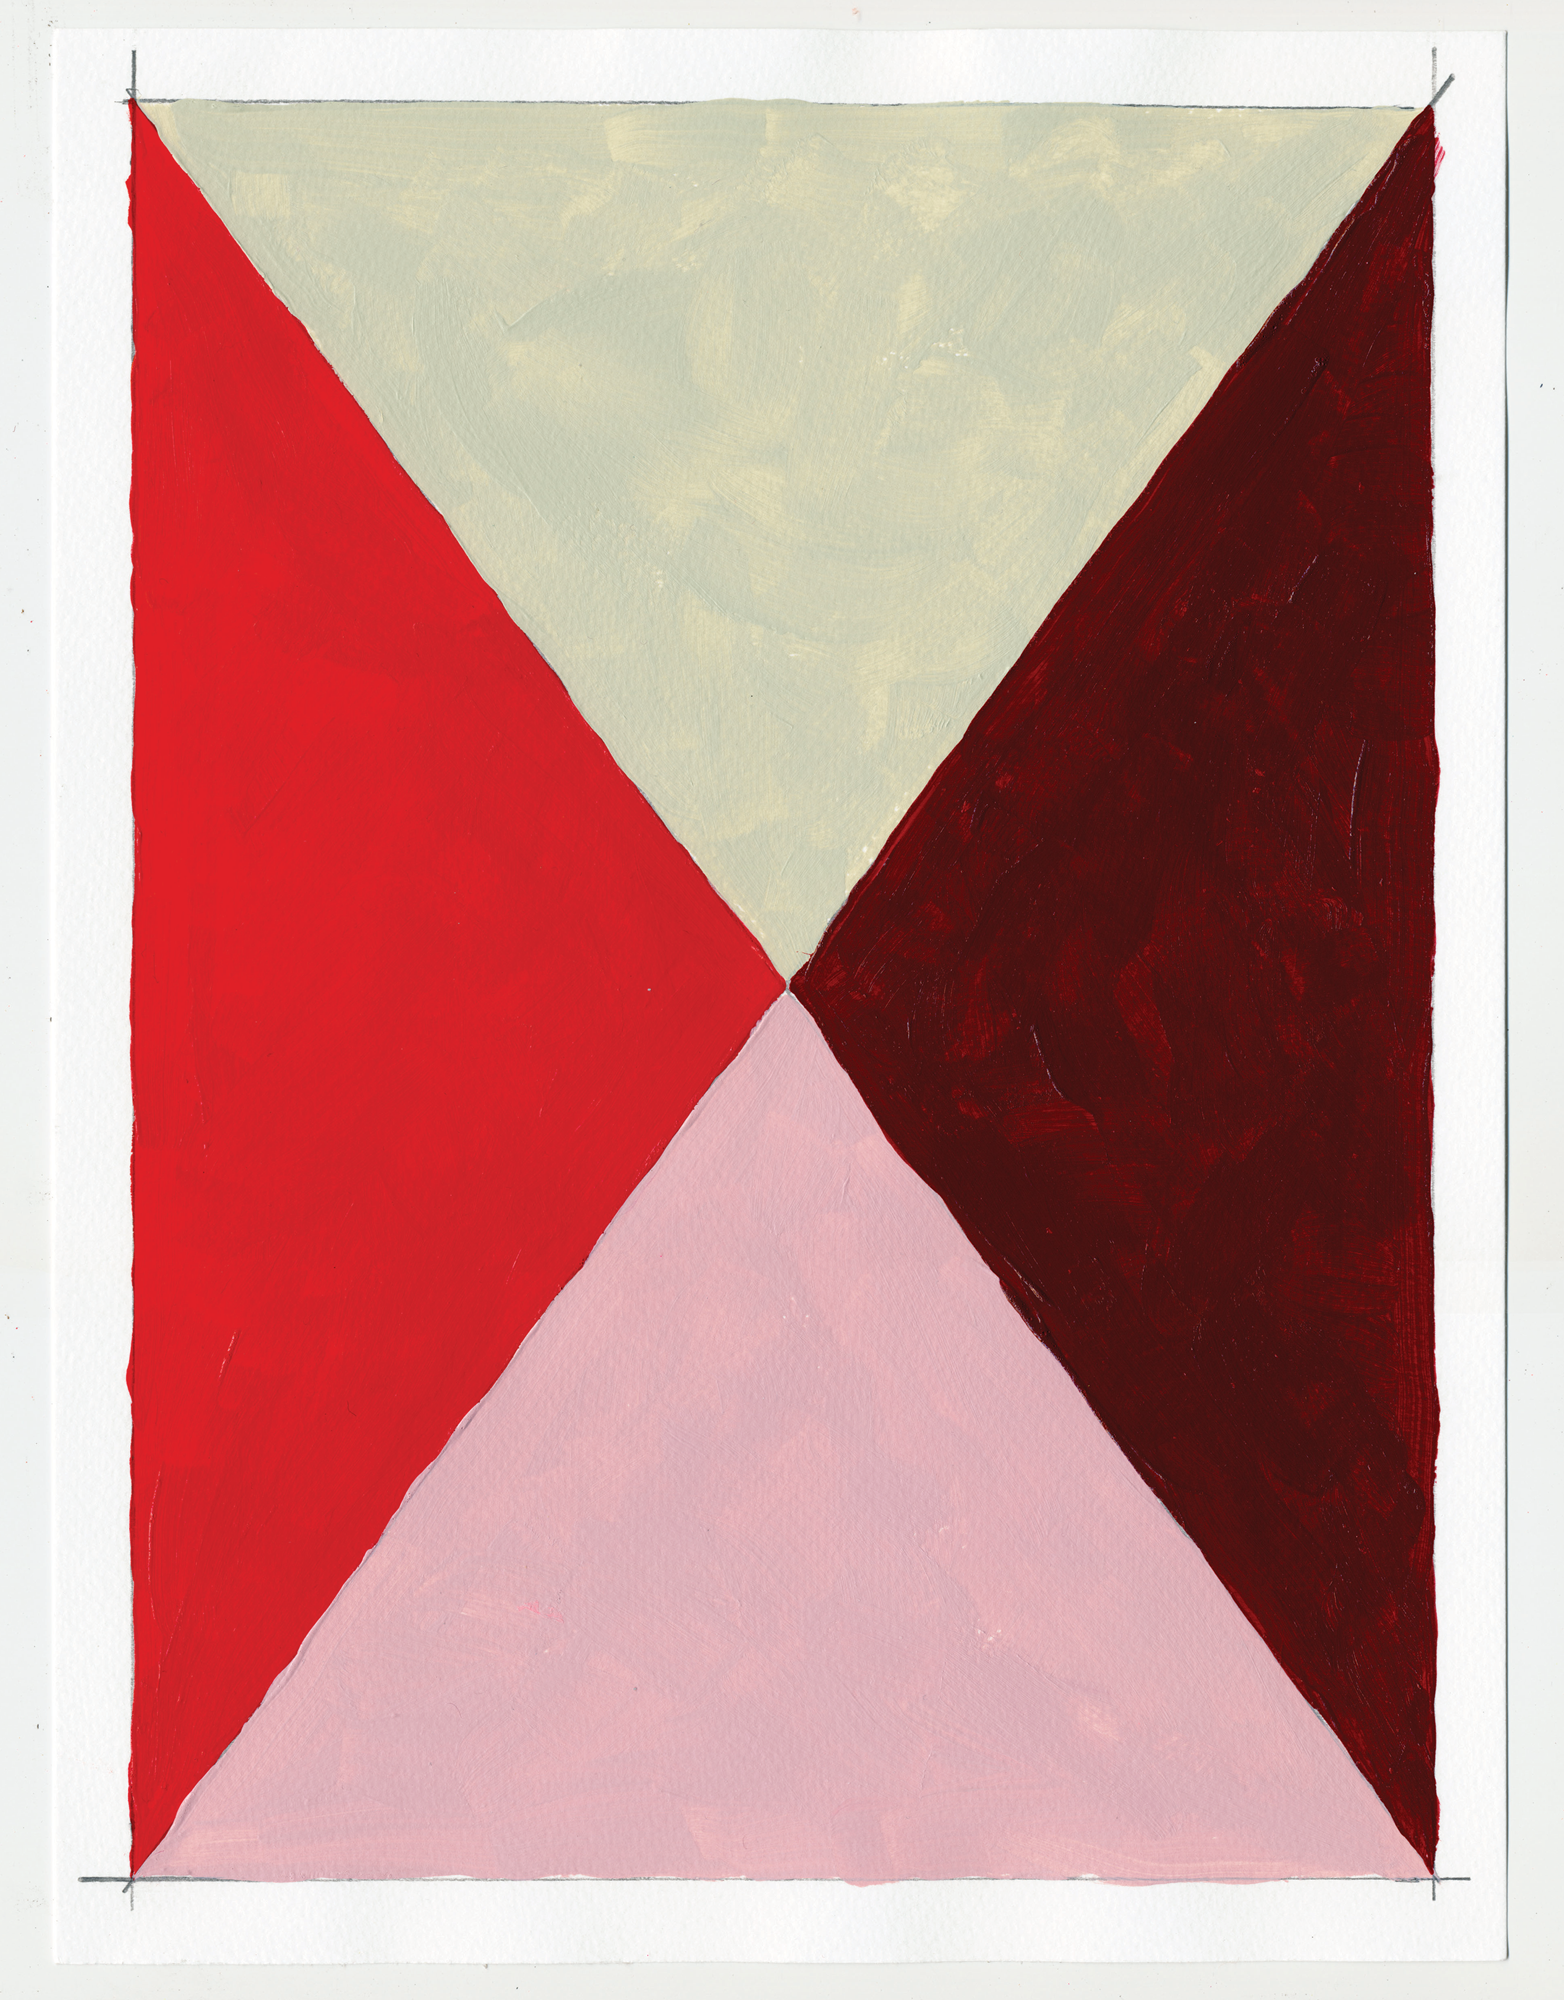   NY16#71  , 12" X 9", acrylic on paper, 2016 SOLD  prints at Artfully   